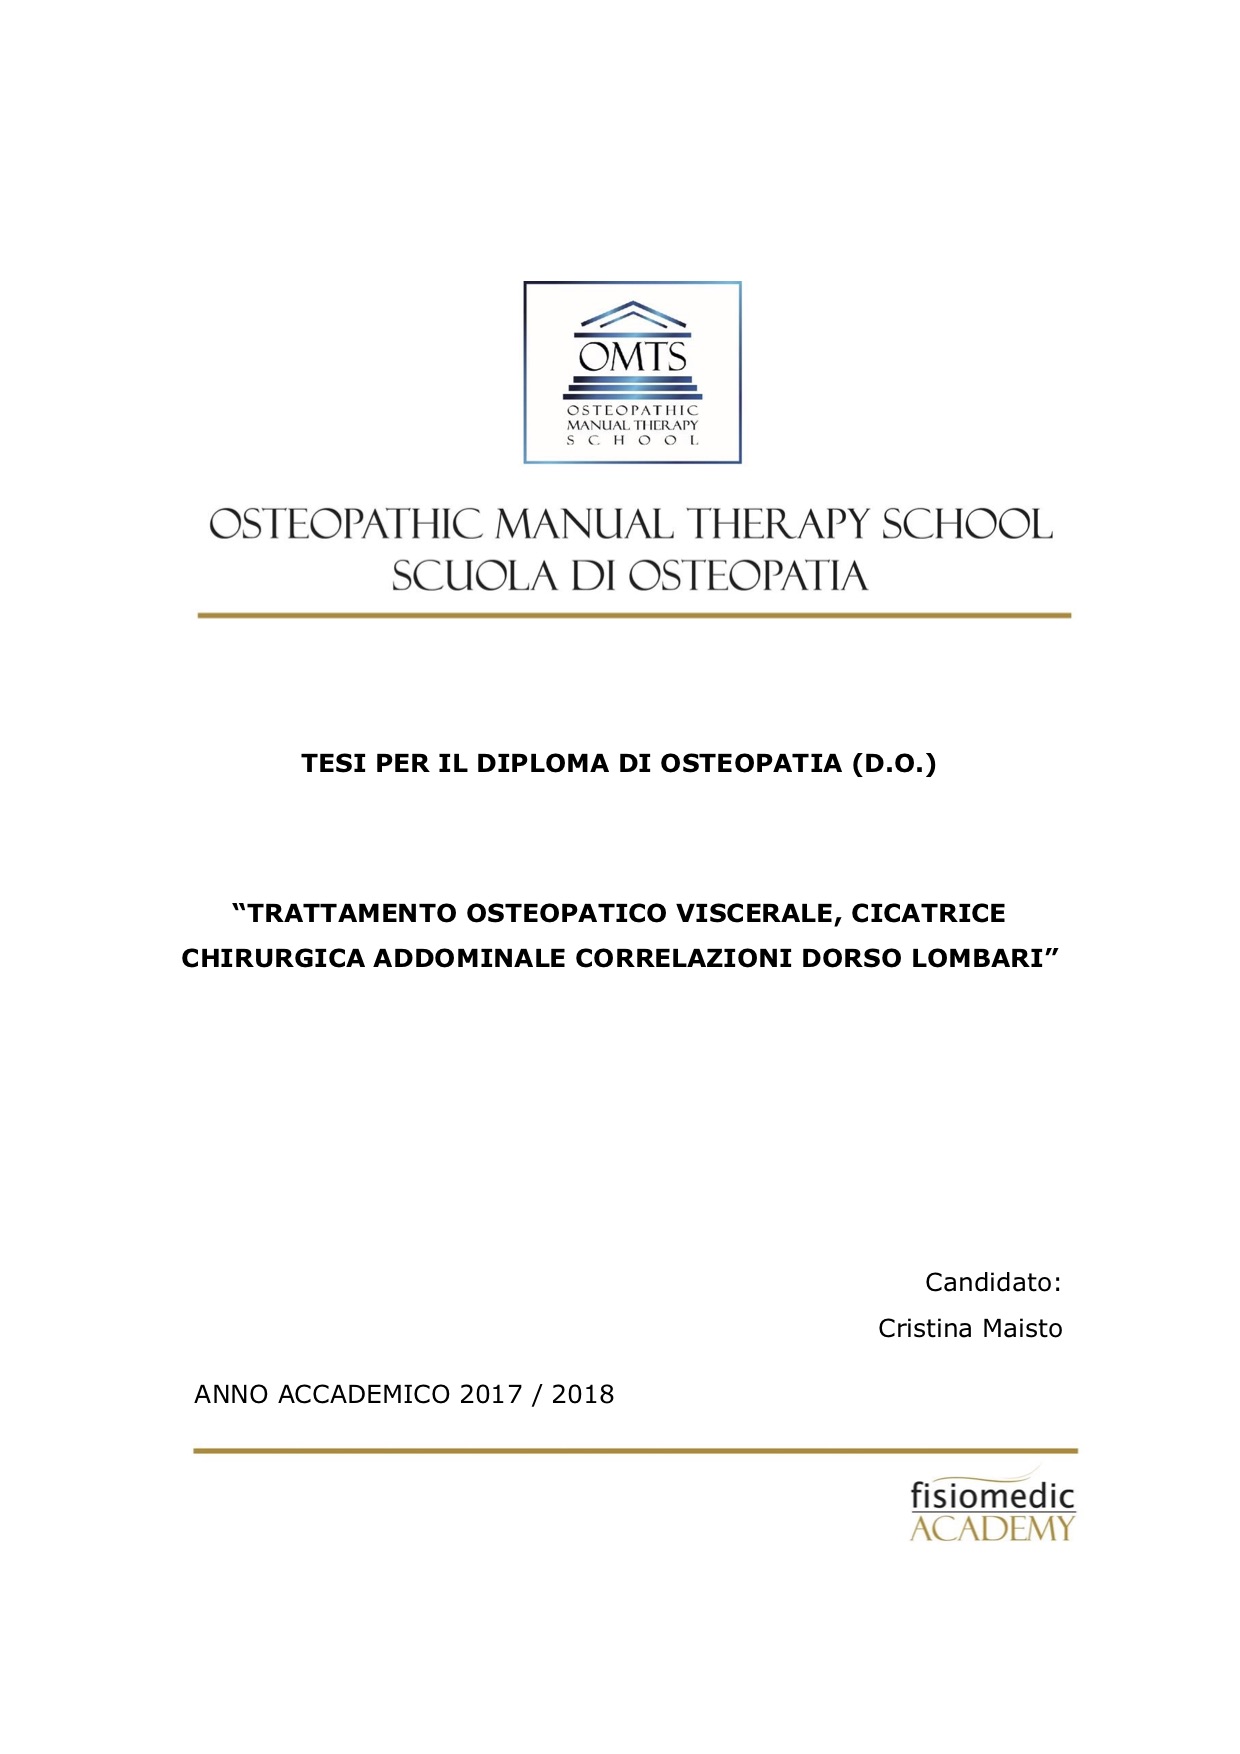 Cristina Maisto Tesi Diploma Osteopatia 2018